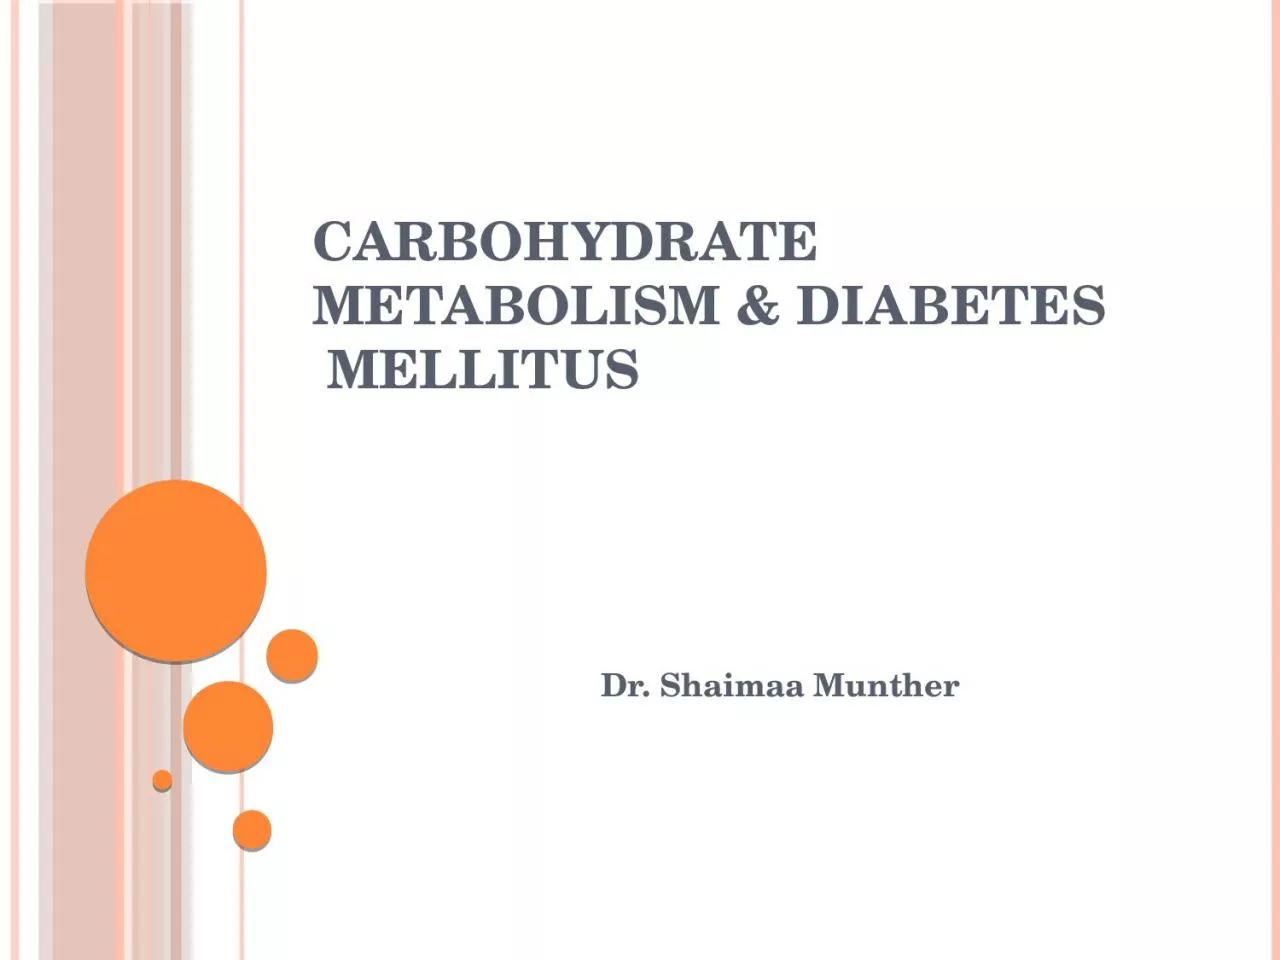 Carbohydrate metabolism & diabetes mellitus